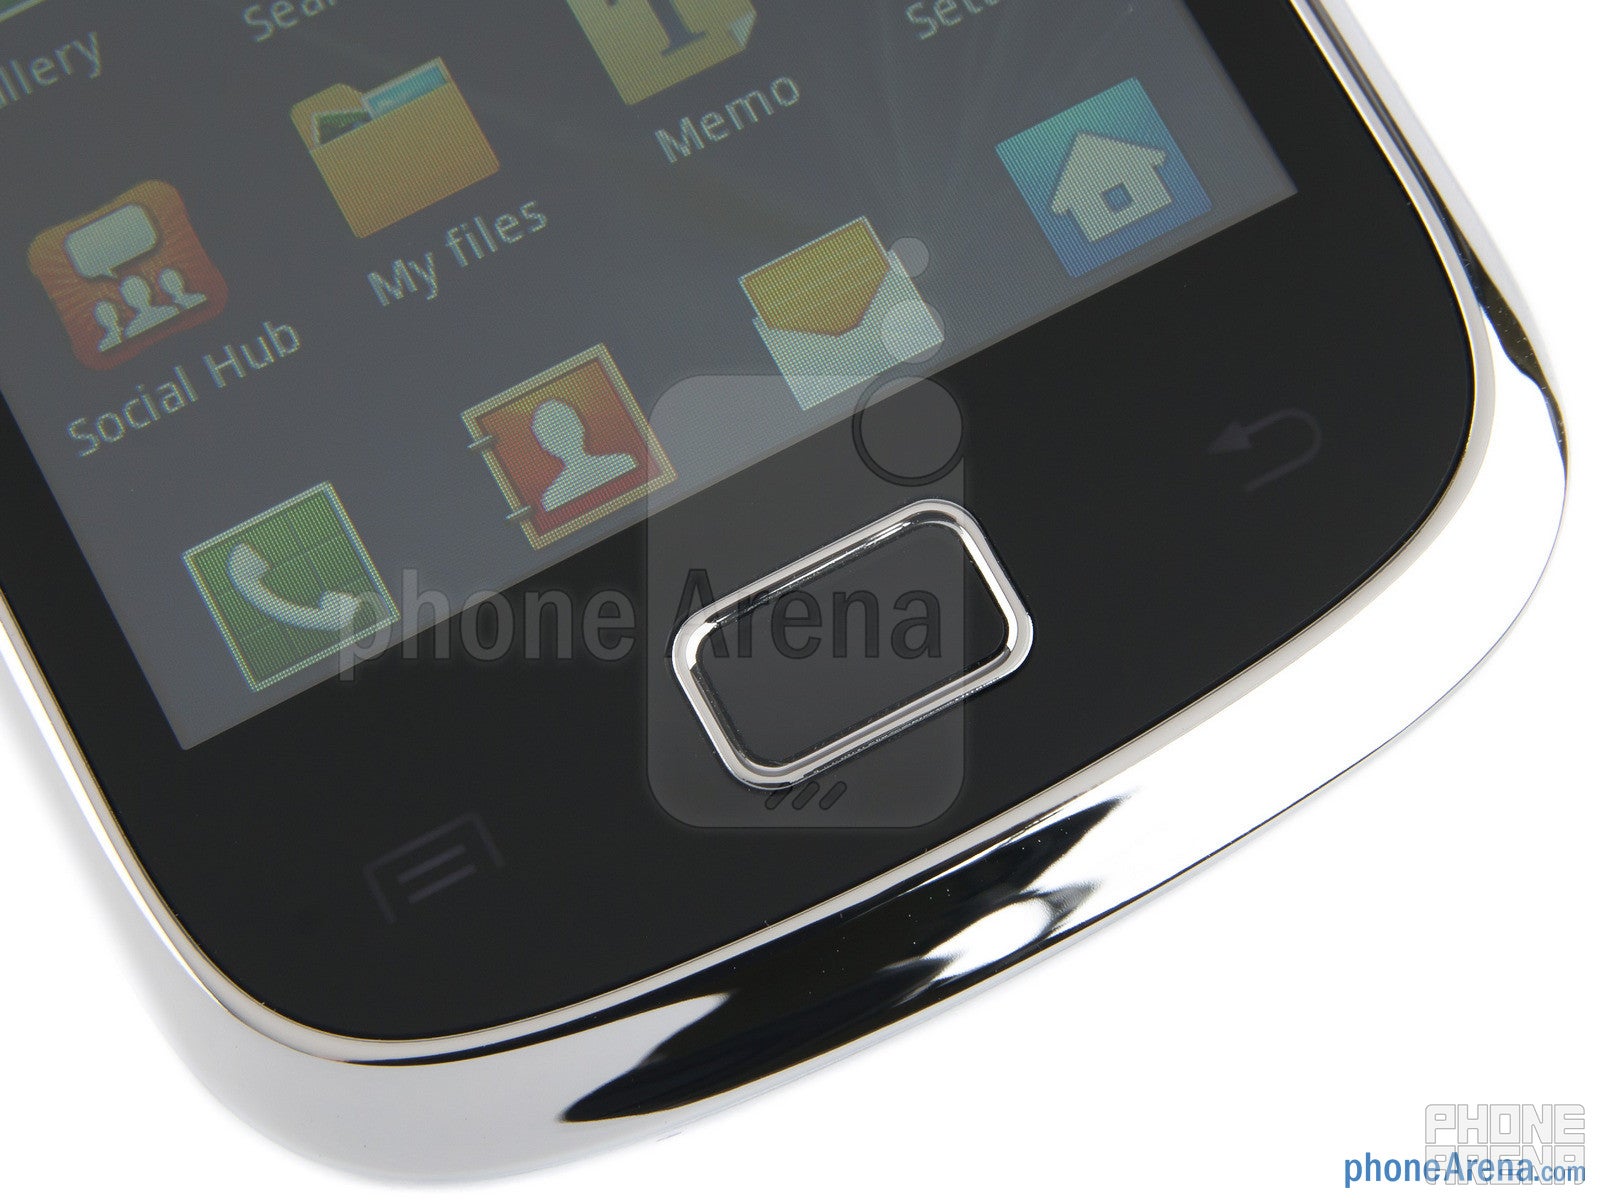 Samsung Galaxy mini 2 Preview